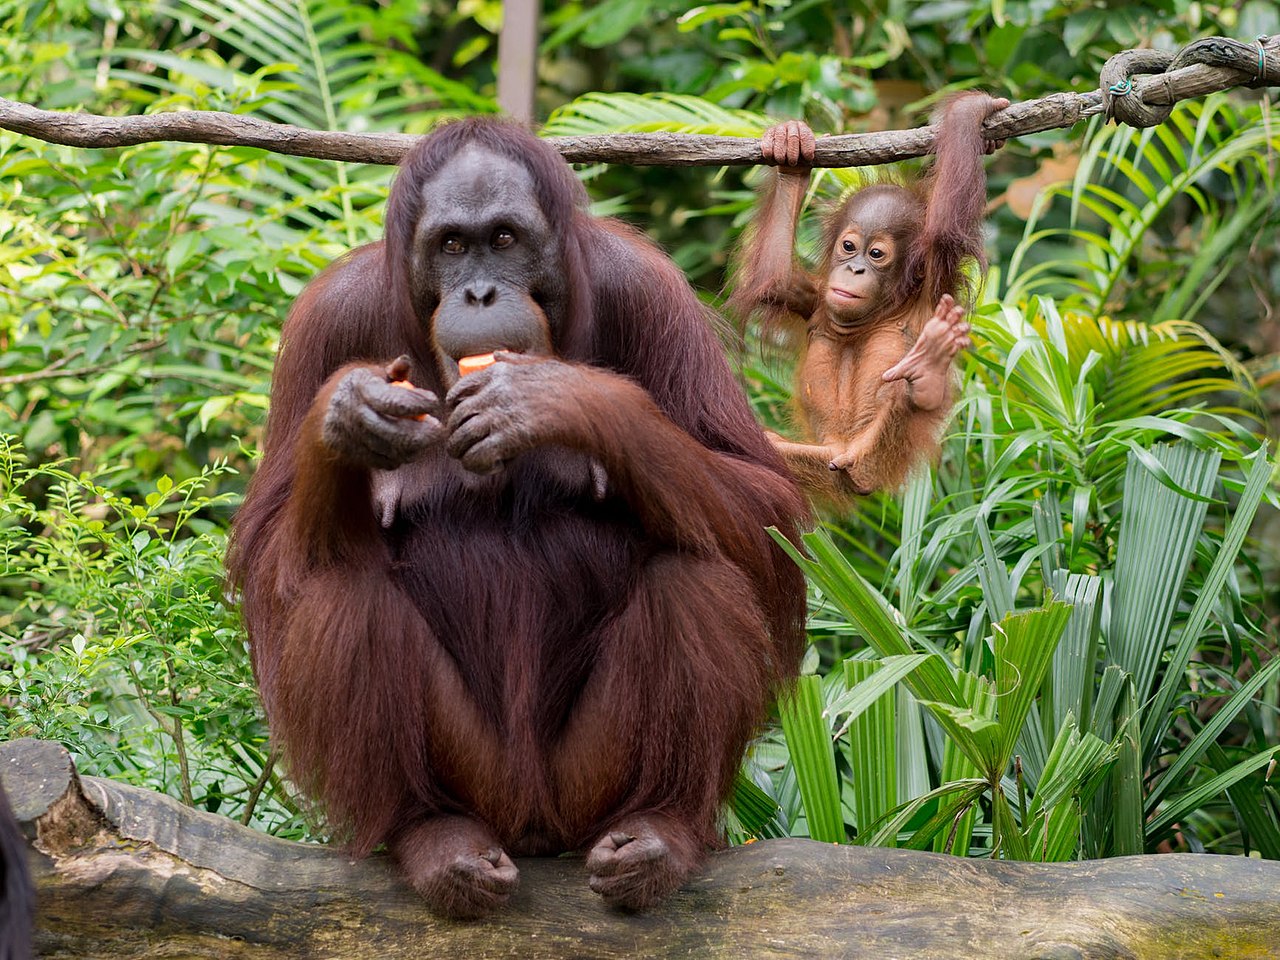 English Solitary orangutan (genus Pongo) eating with infant)